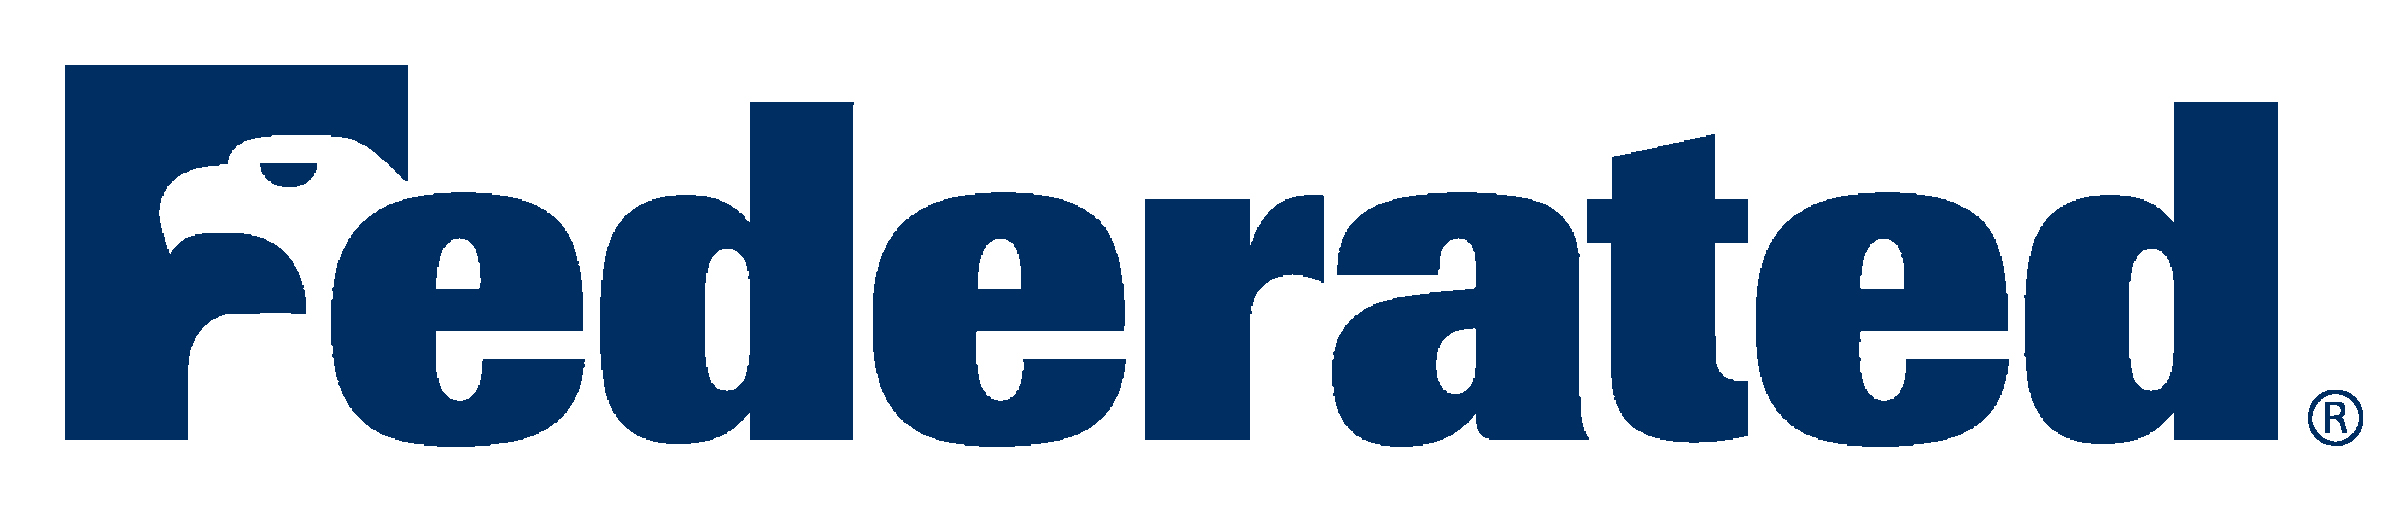 Federated Investors logo